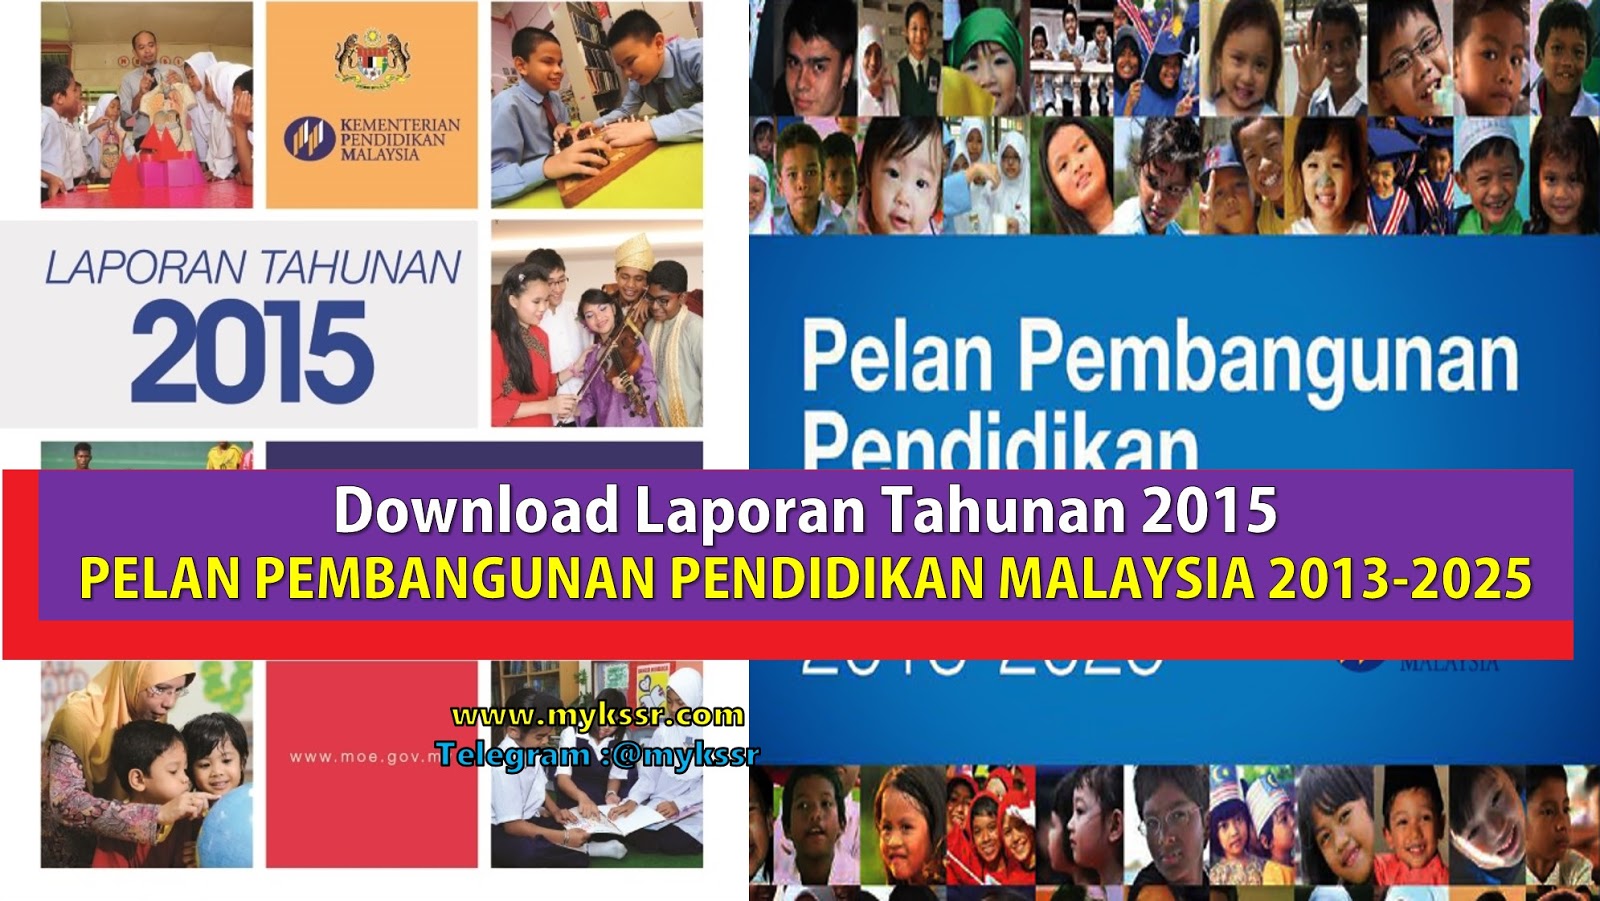 pelan pembangunan pendidikan malaysia in english